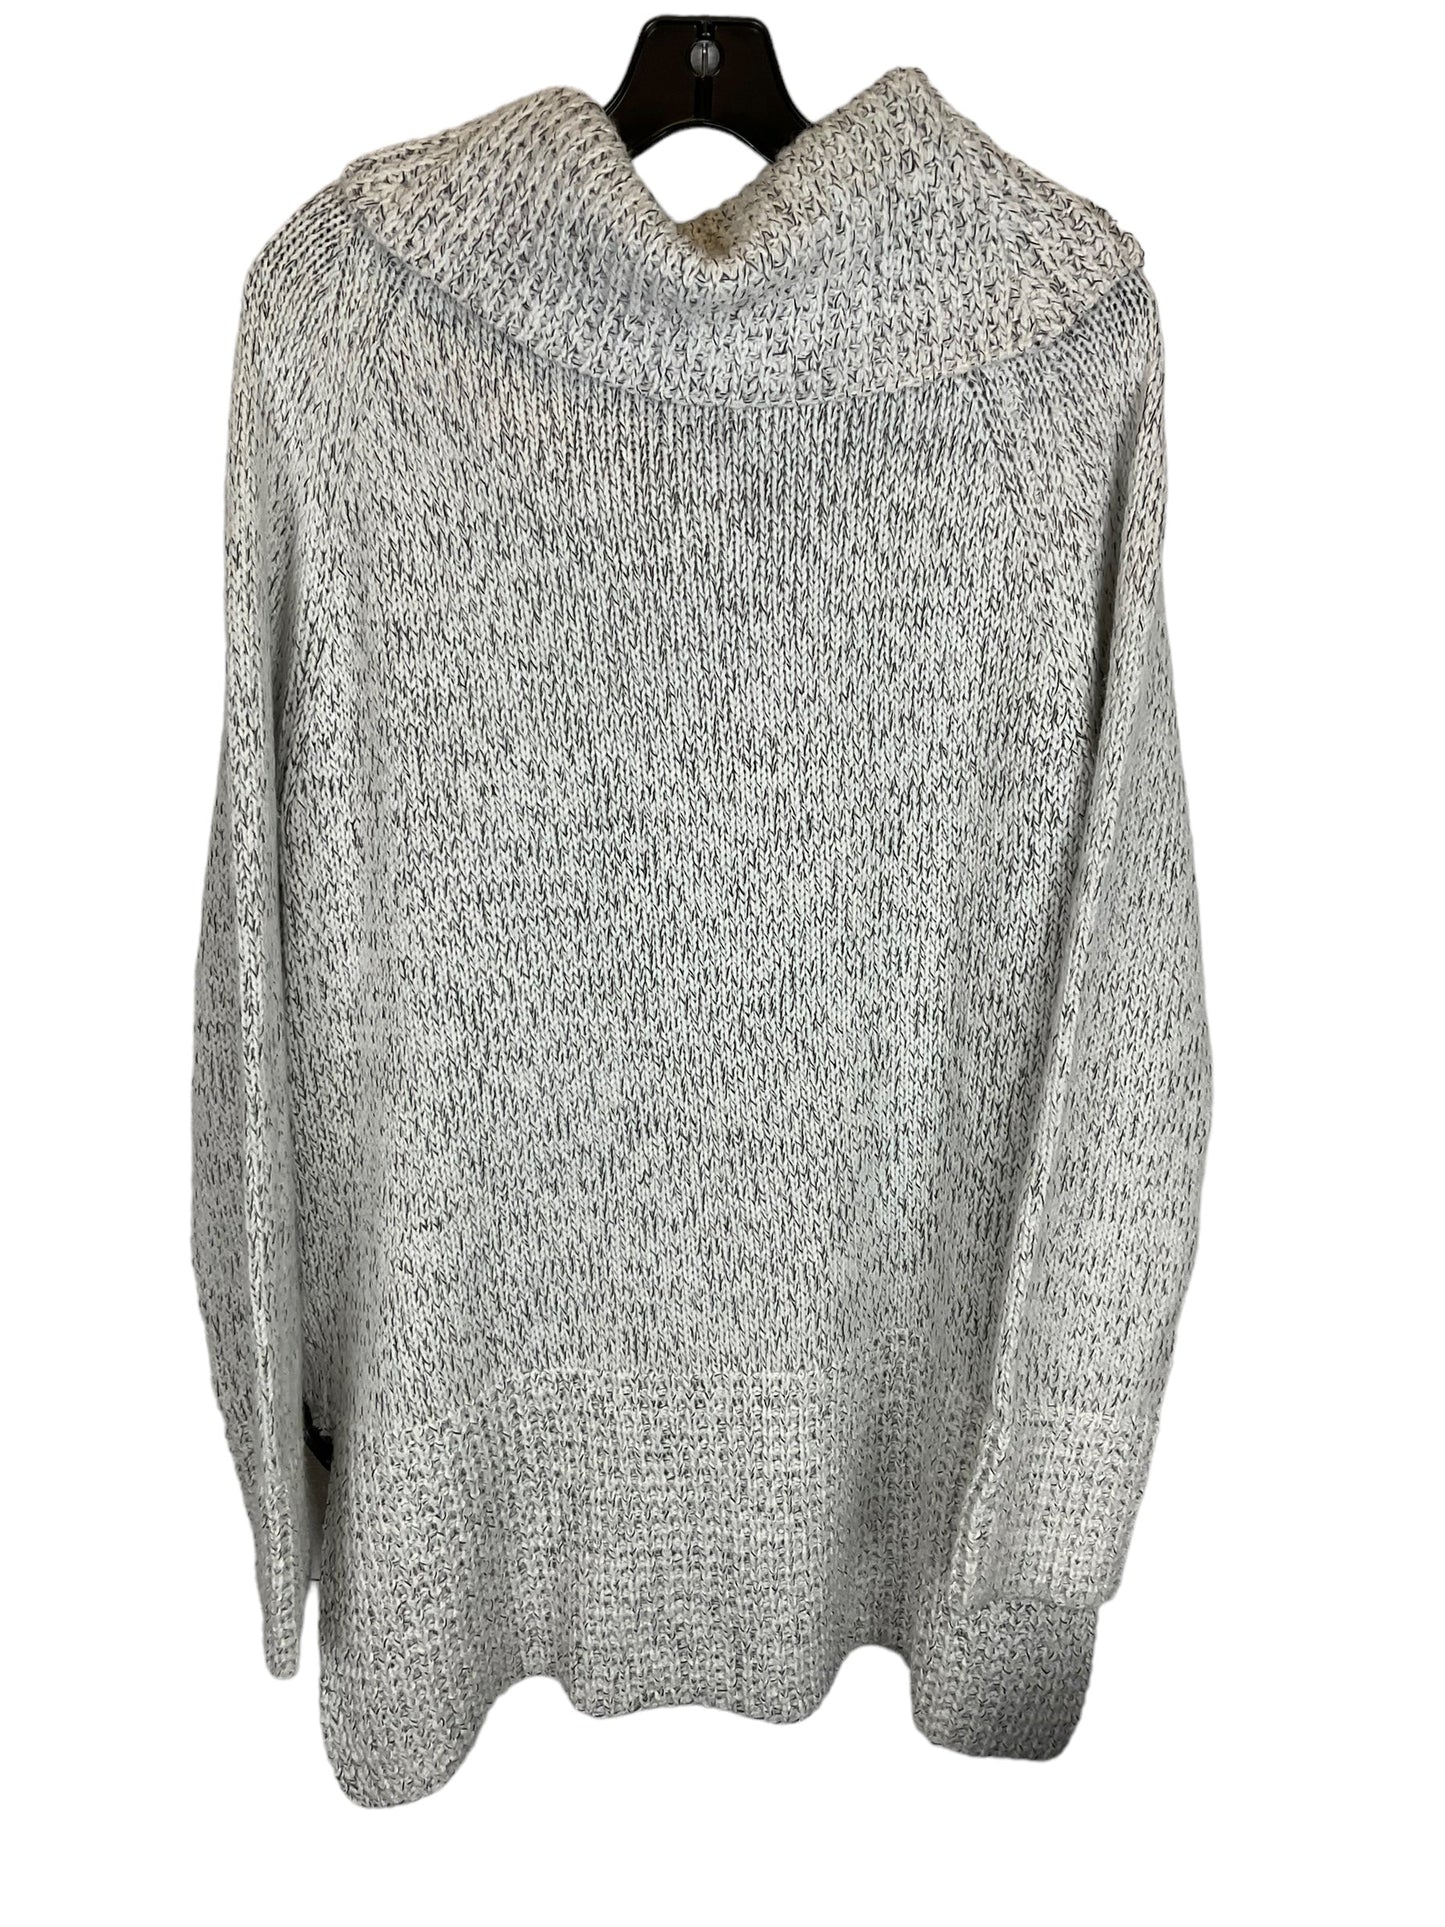 Sweater By Dkny  Size: Xl